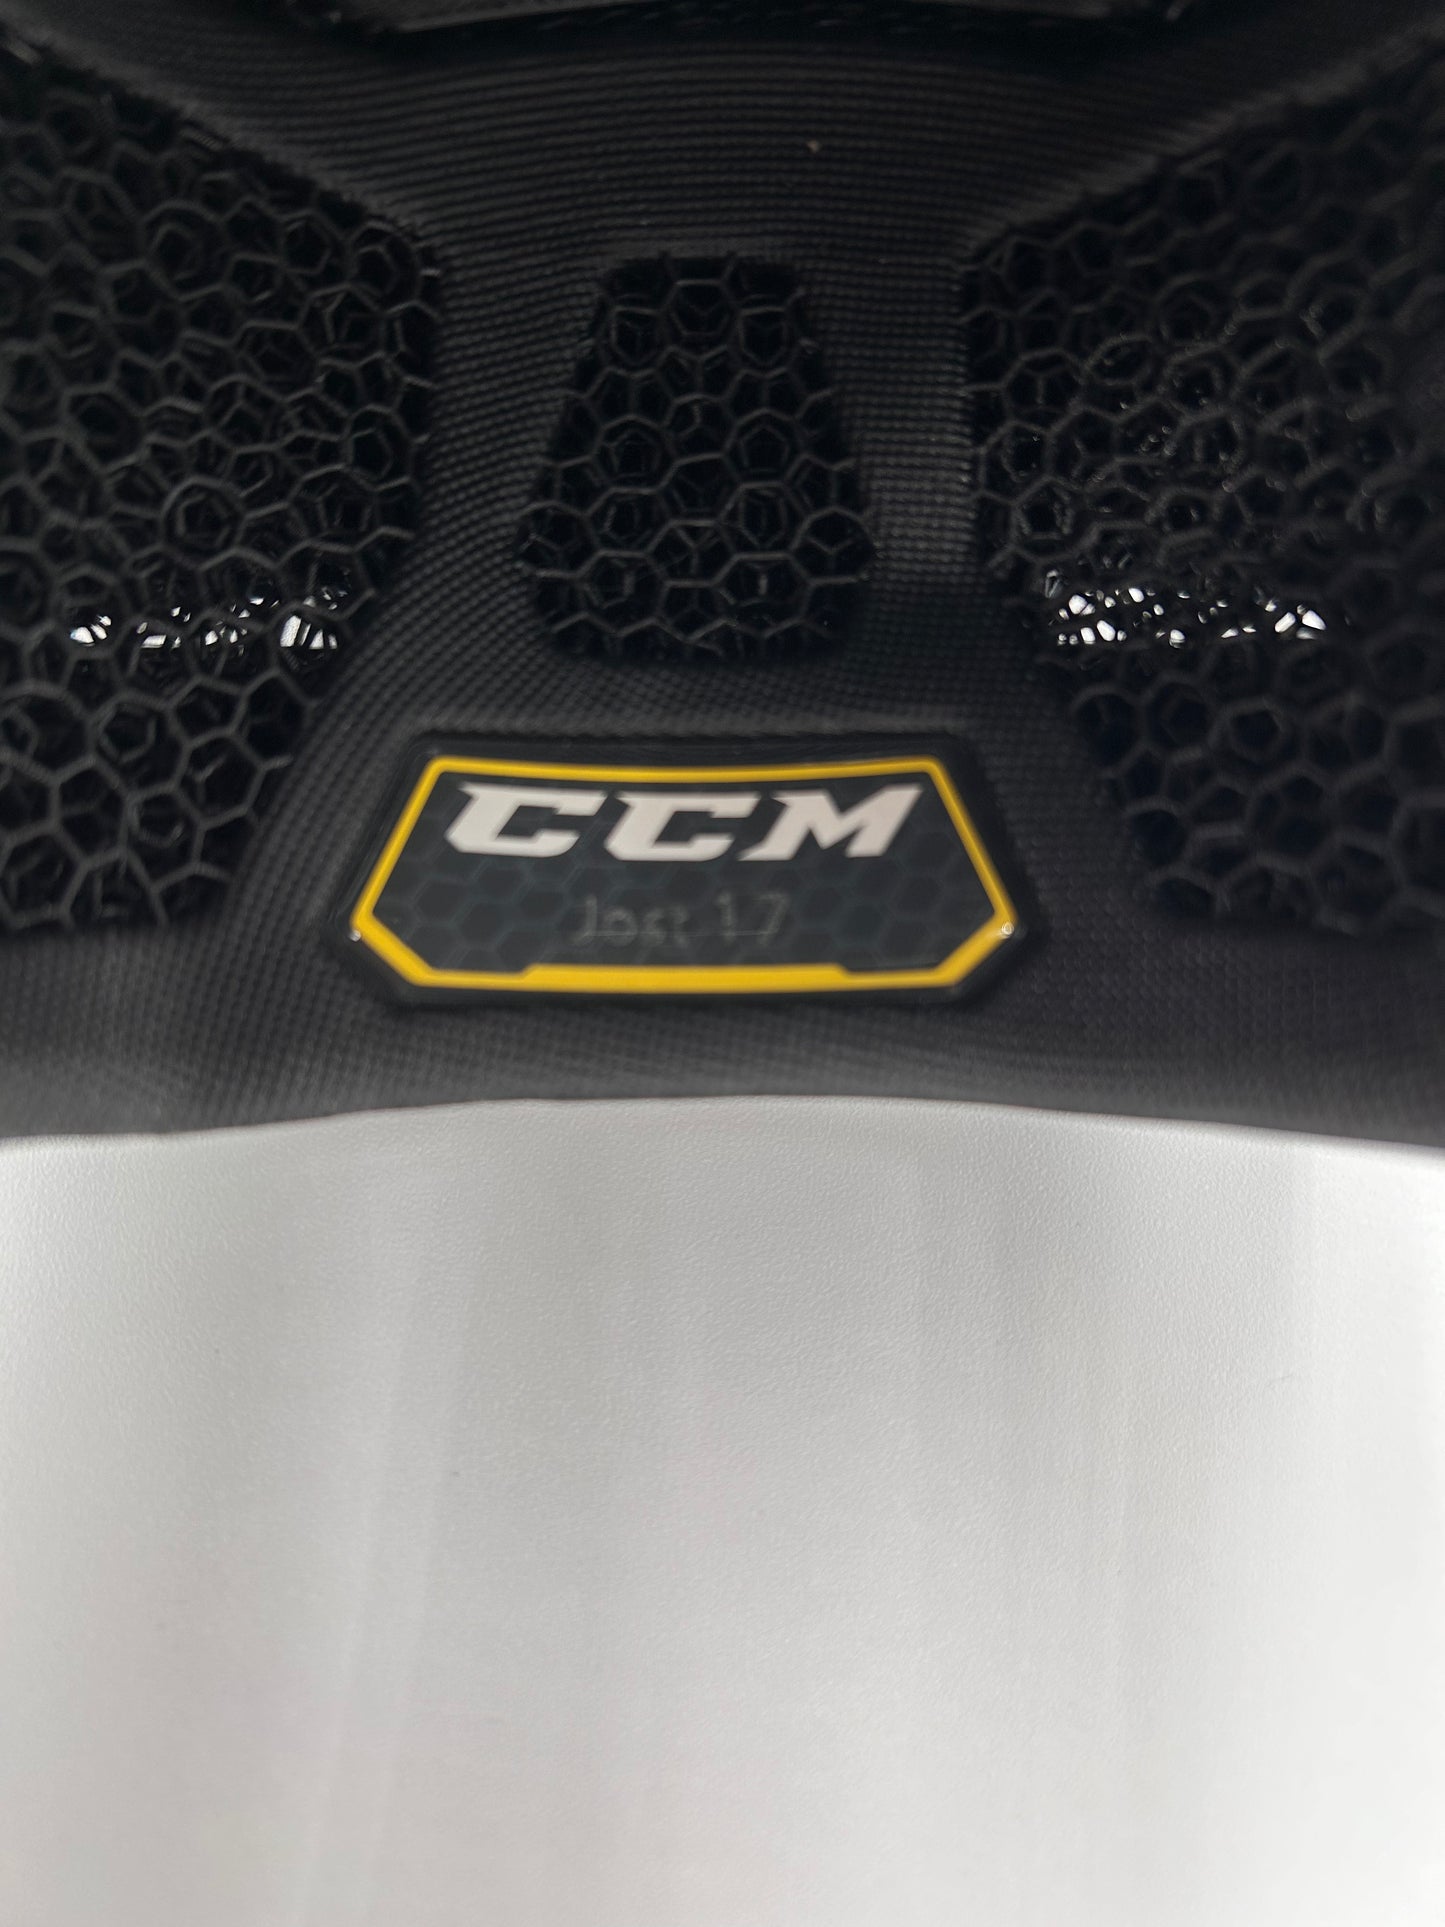 New Colorado Avalanche Prostock CCM Tacks X Total Custom “Navy” Helmet